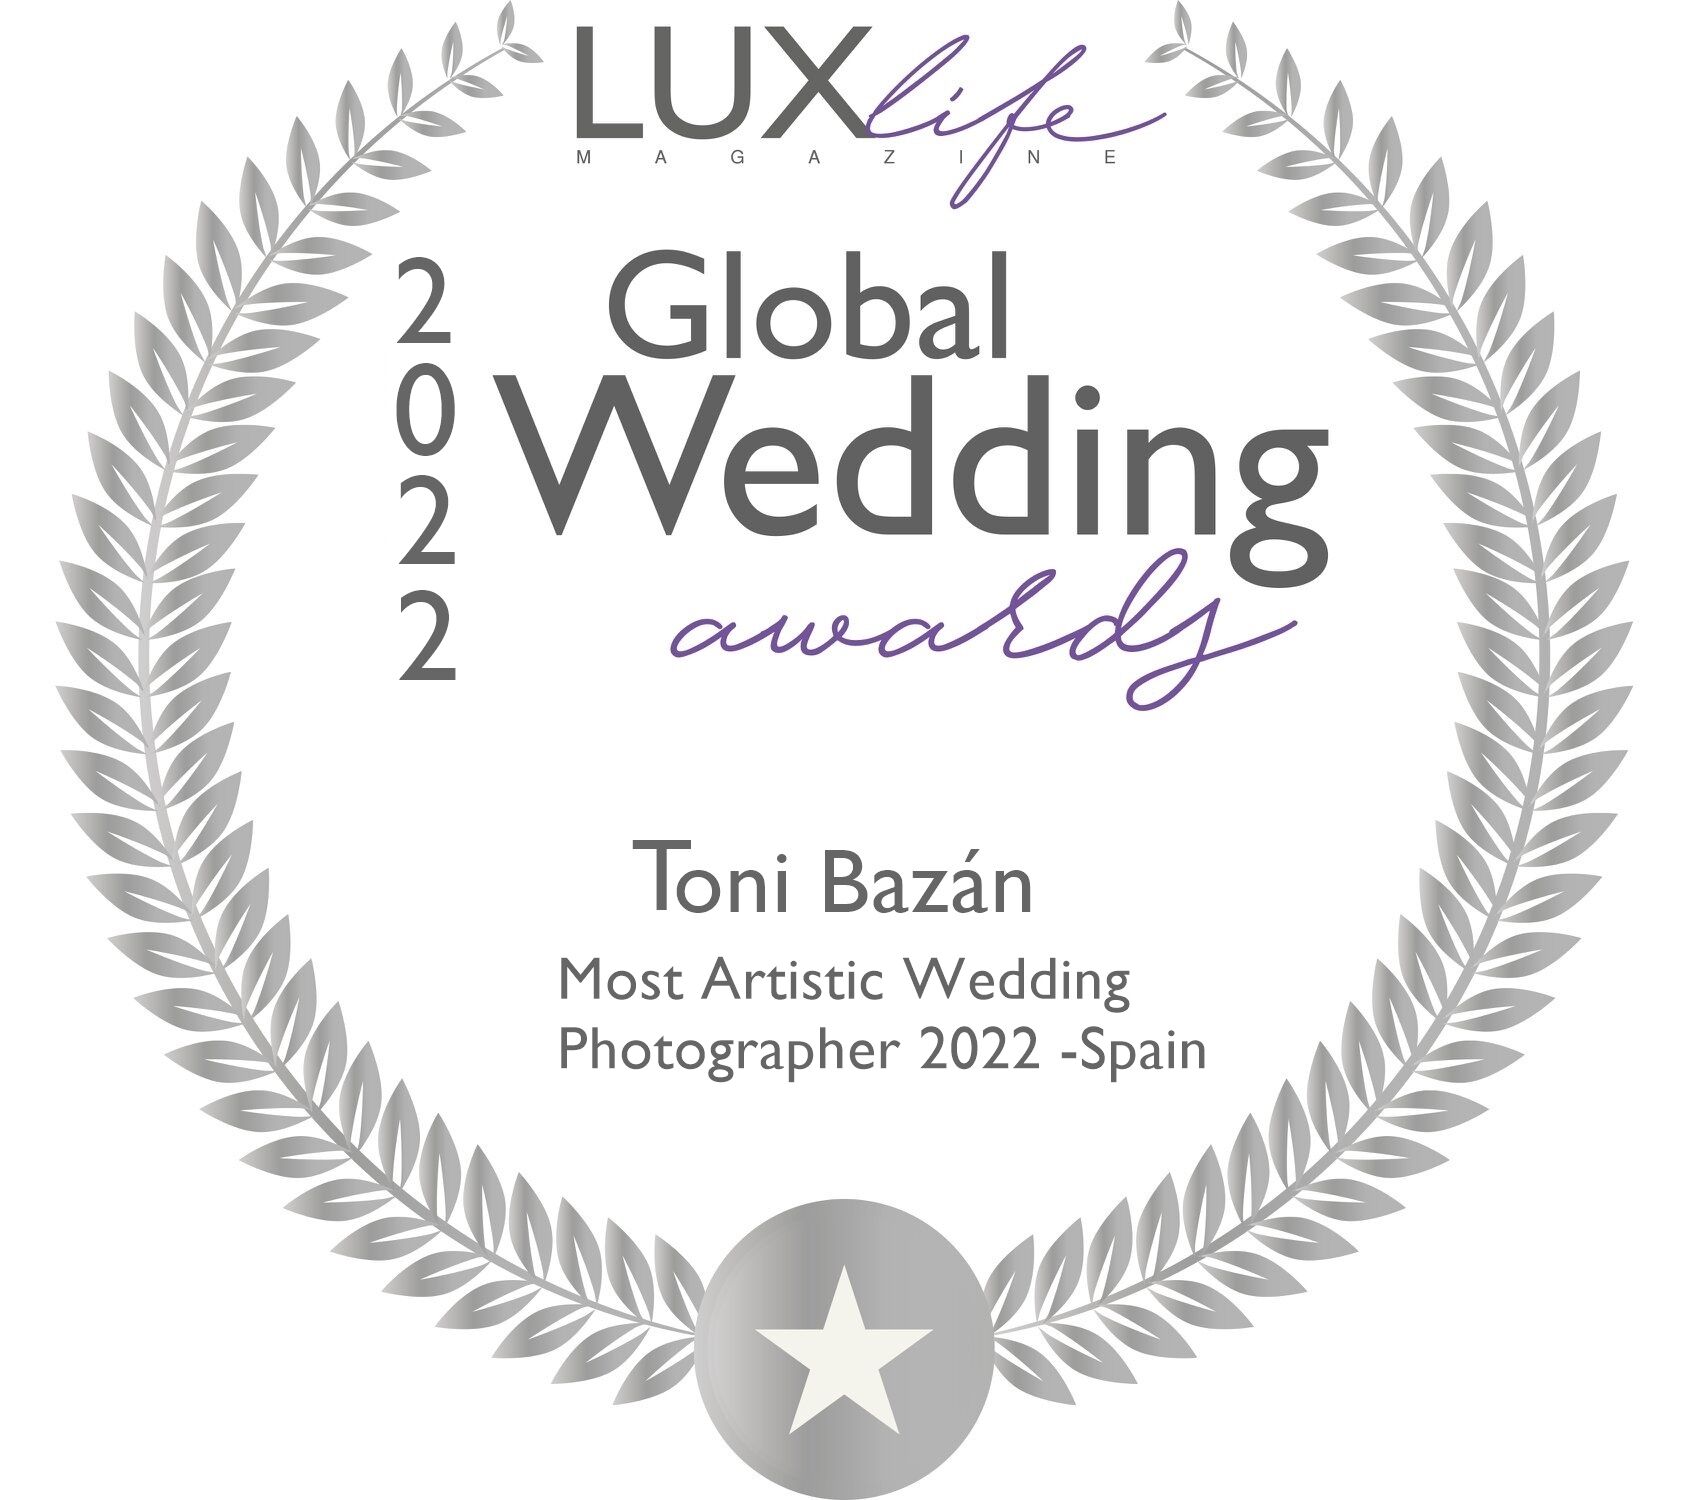 Luxlife wedding awards 2022